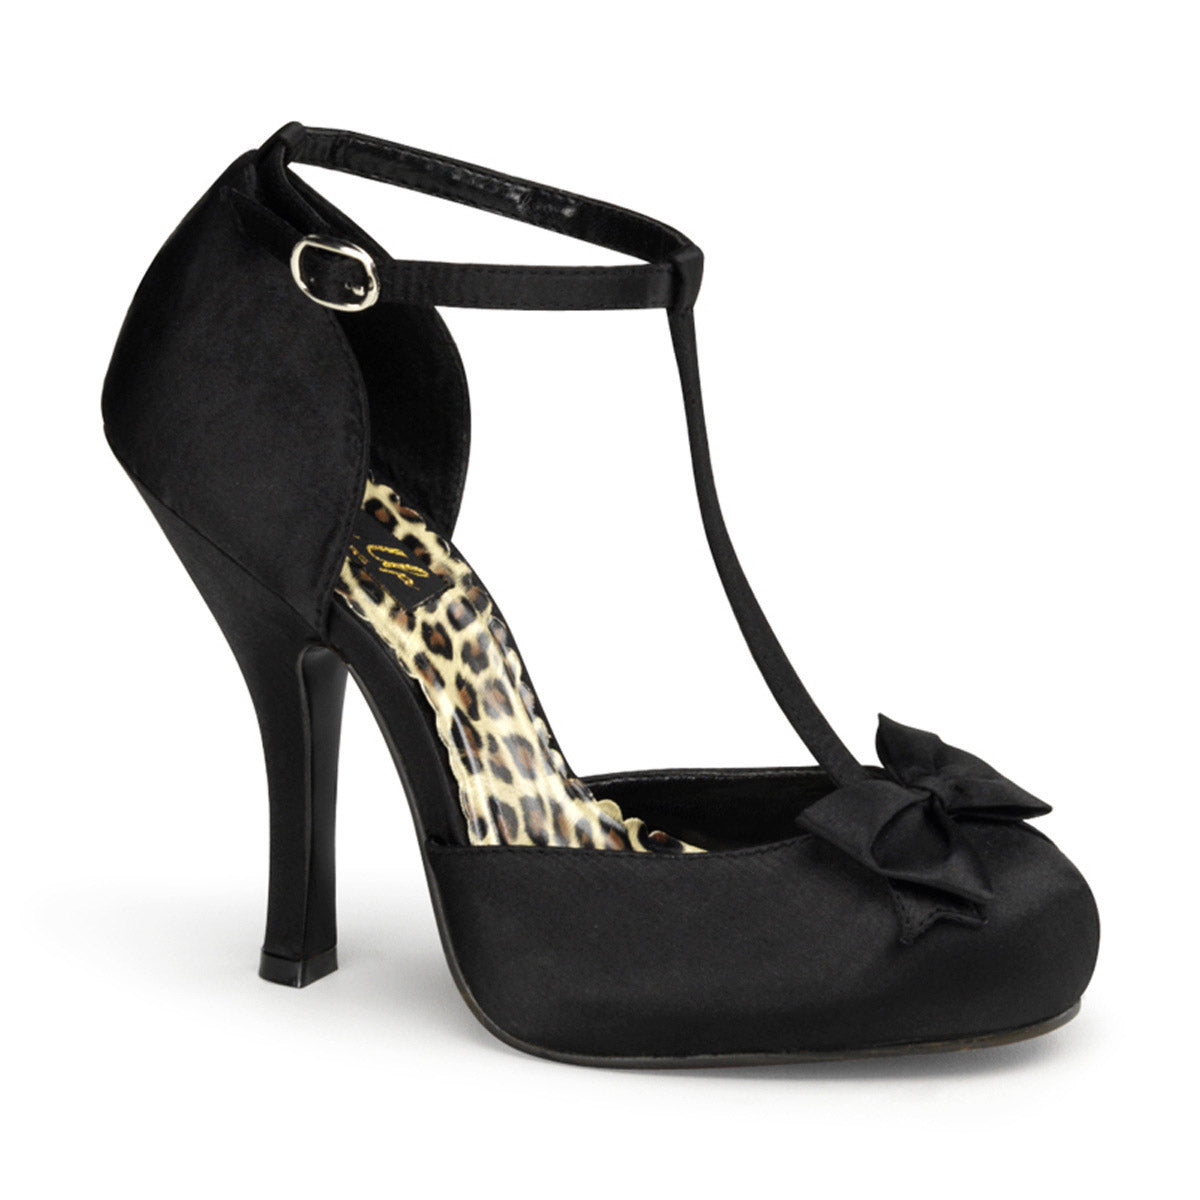 Sexy Bowtie T-Strap D'Orsay Pumps Hidden Platform High Heels Shoes Pleaser Pin Up Couture CUTIEPIE/12